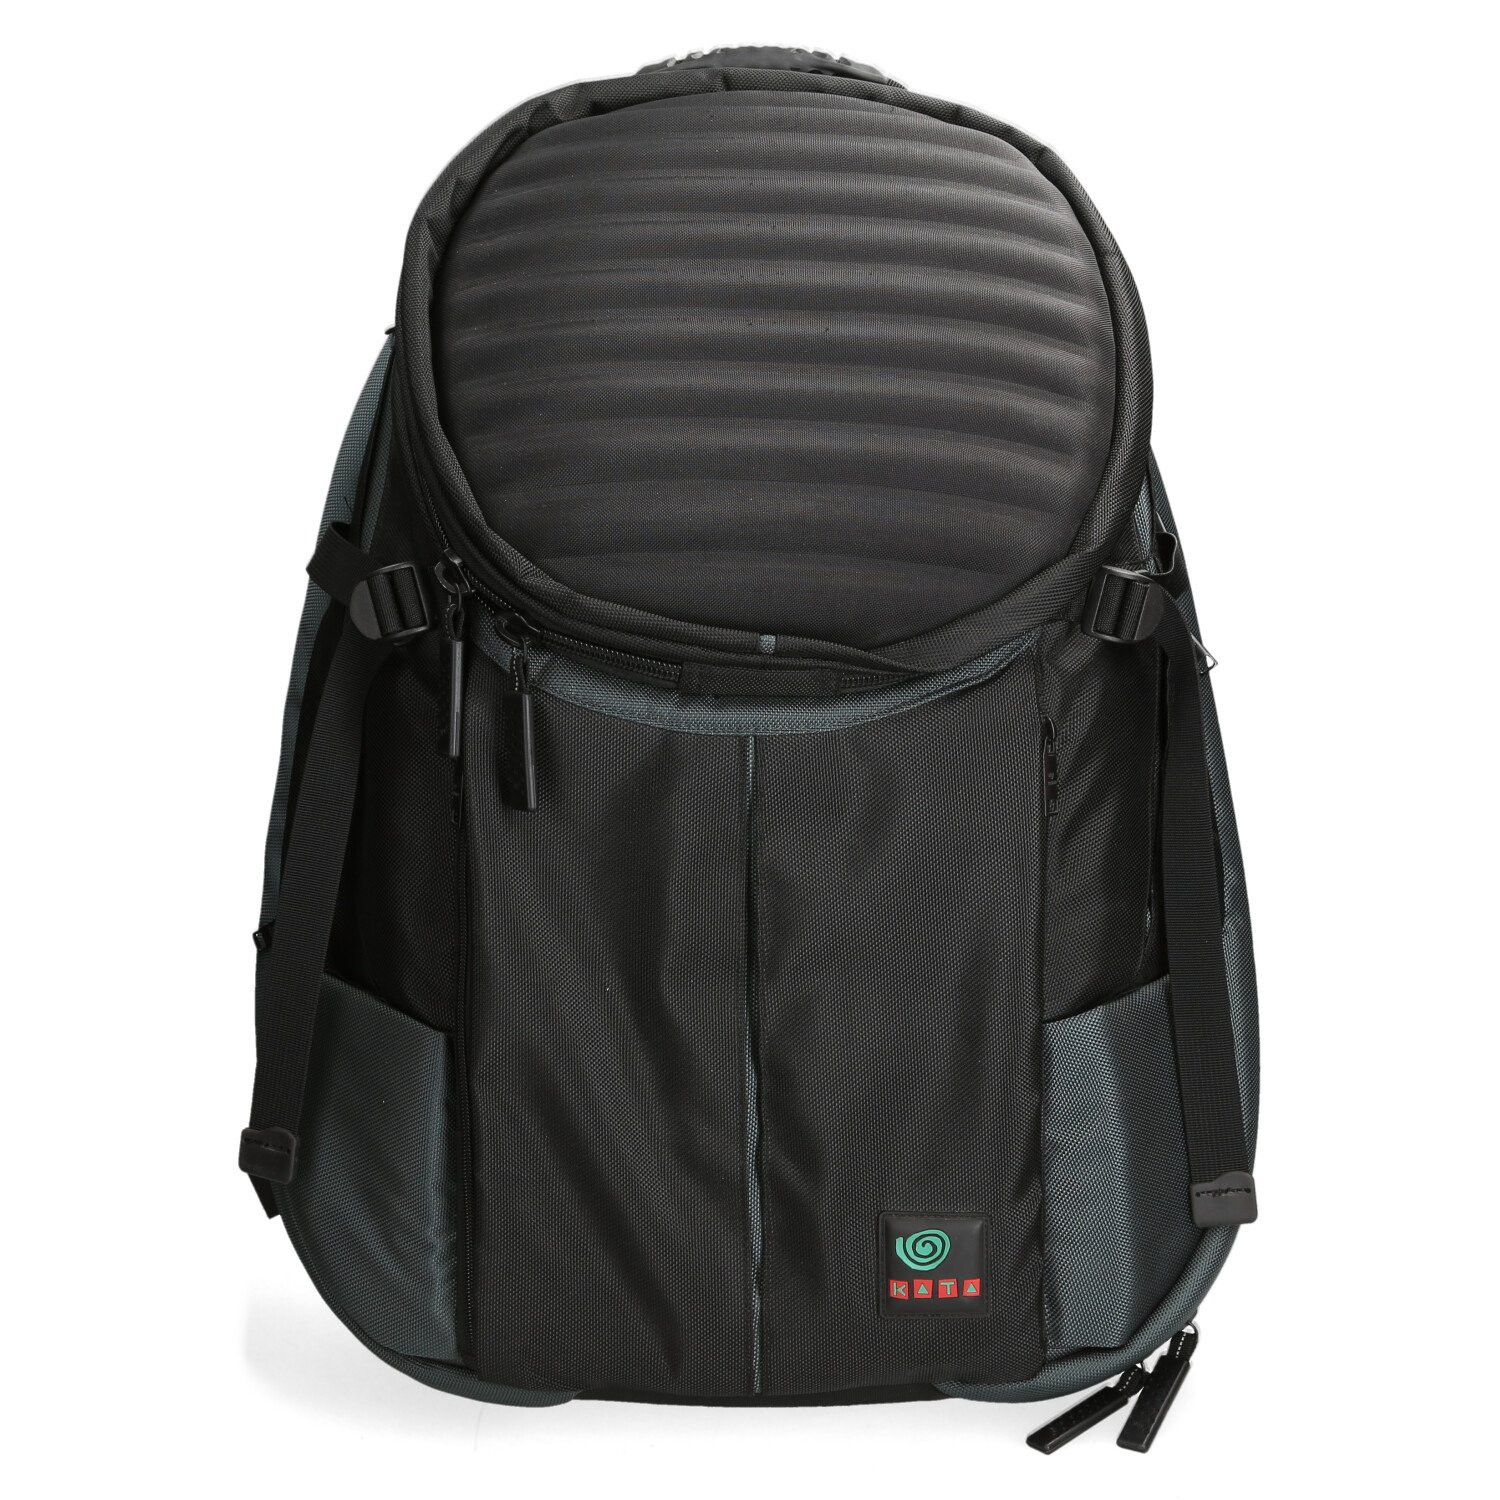 Kata Kata BP-502 Backpack